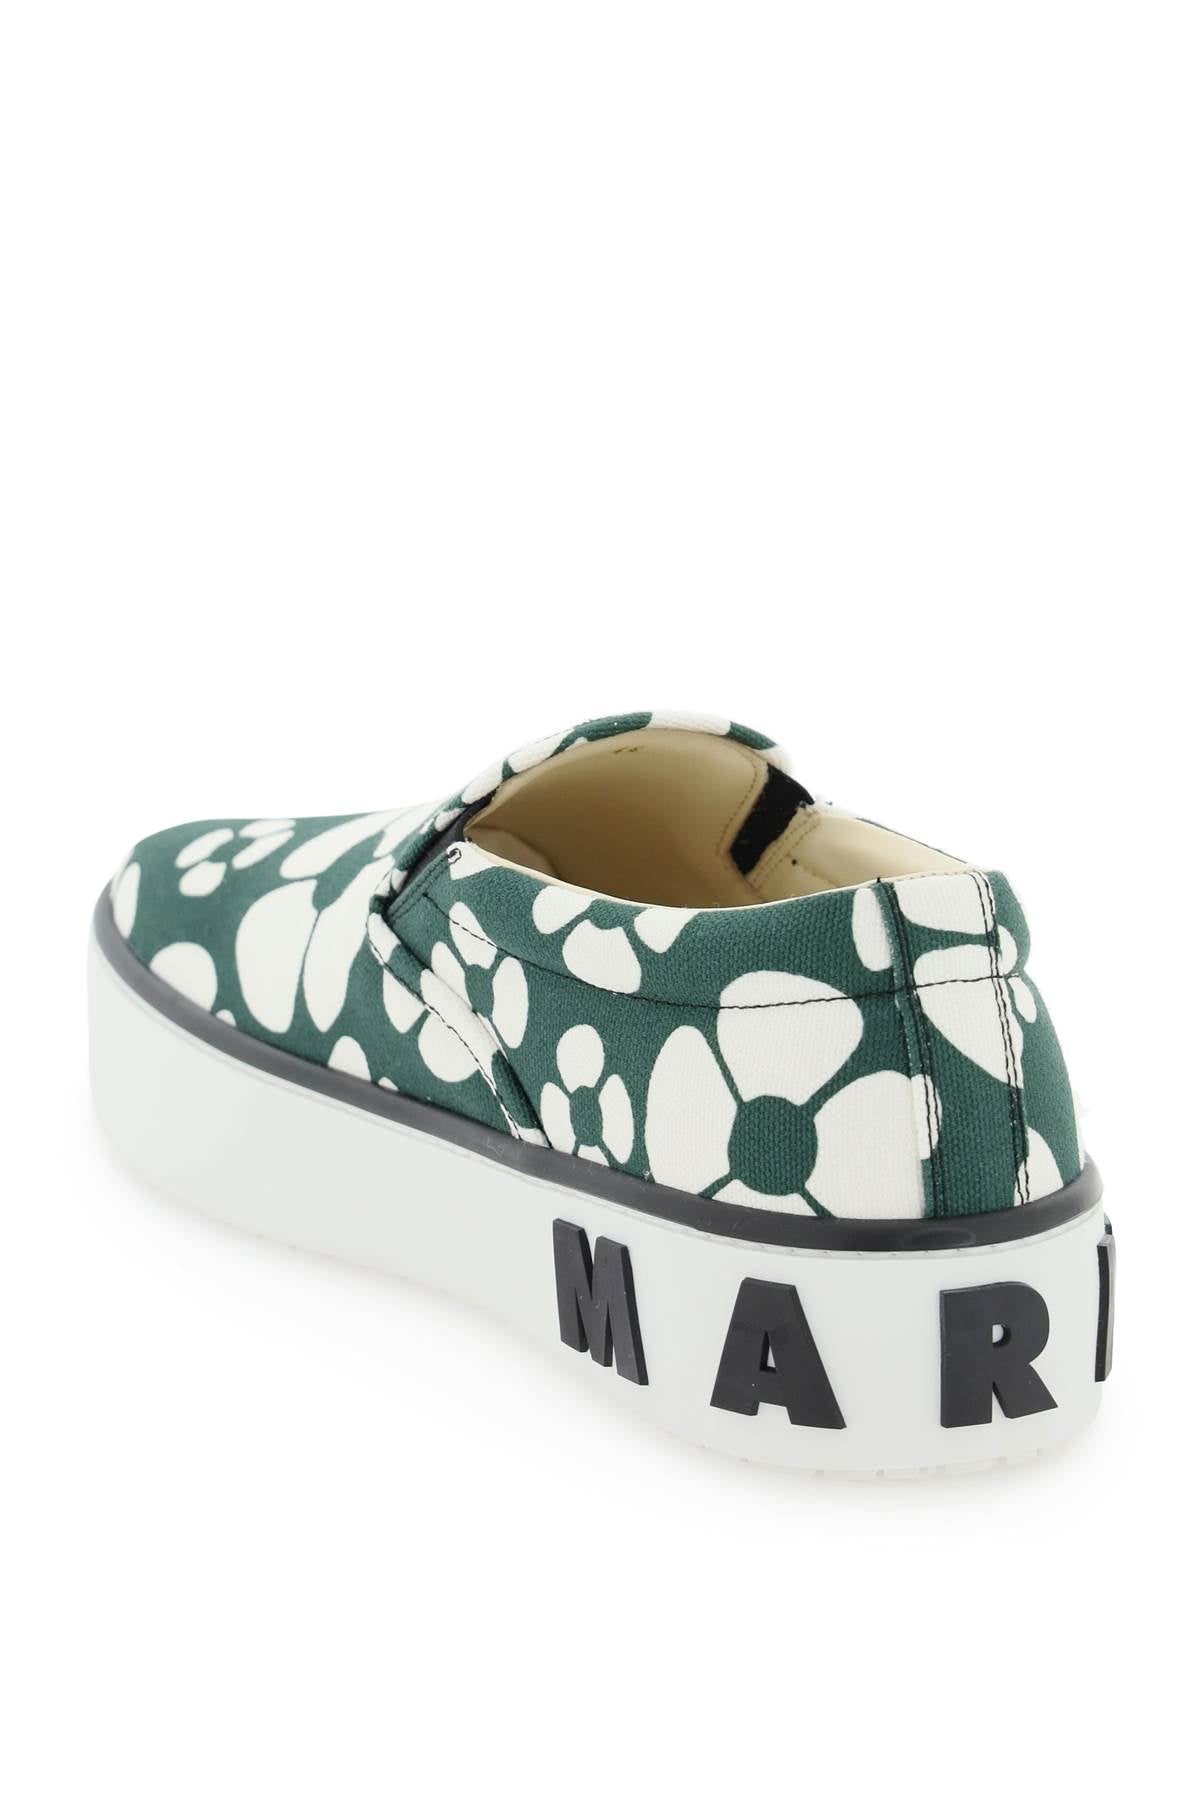 Marni x carhartt slip-on sneakers-2